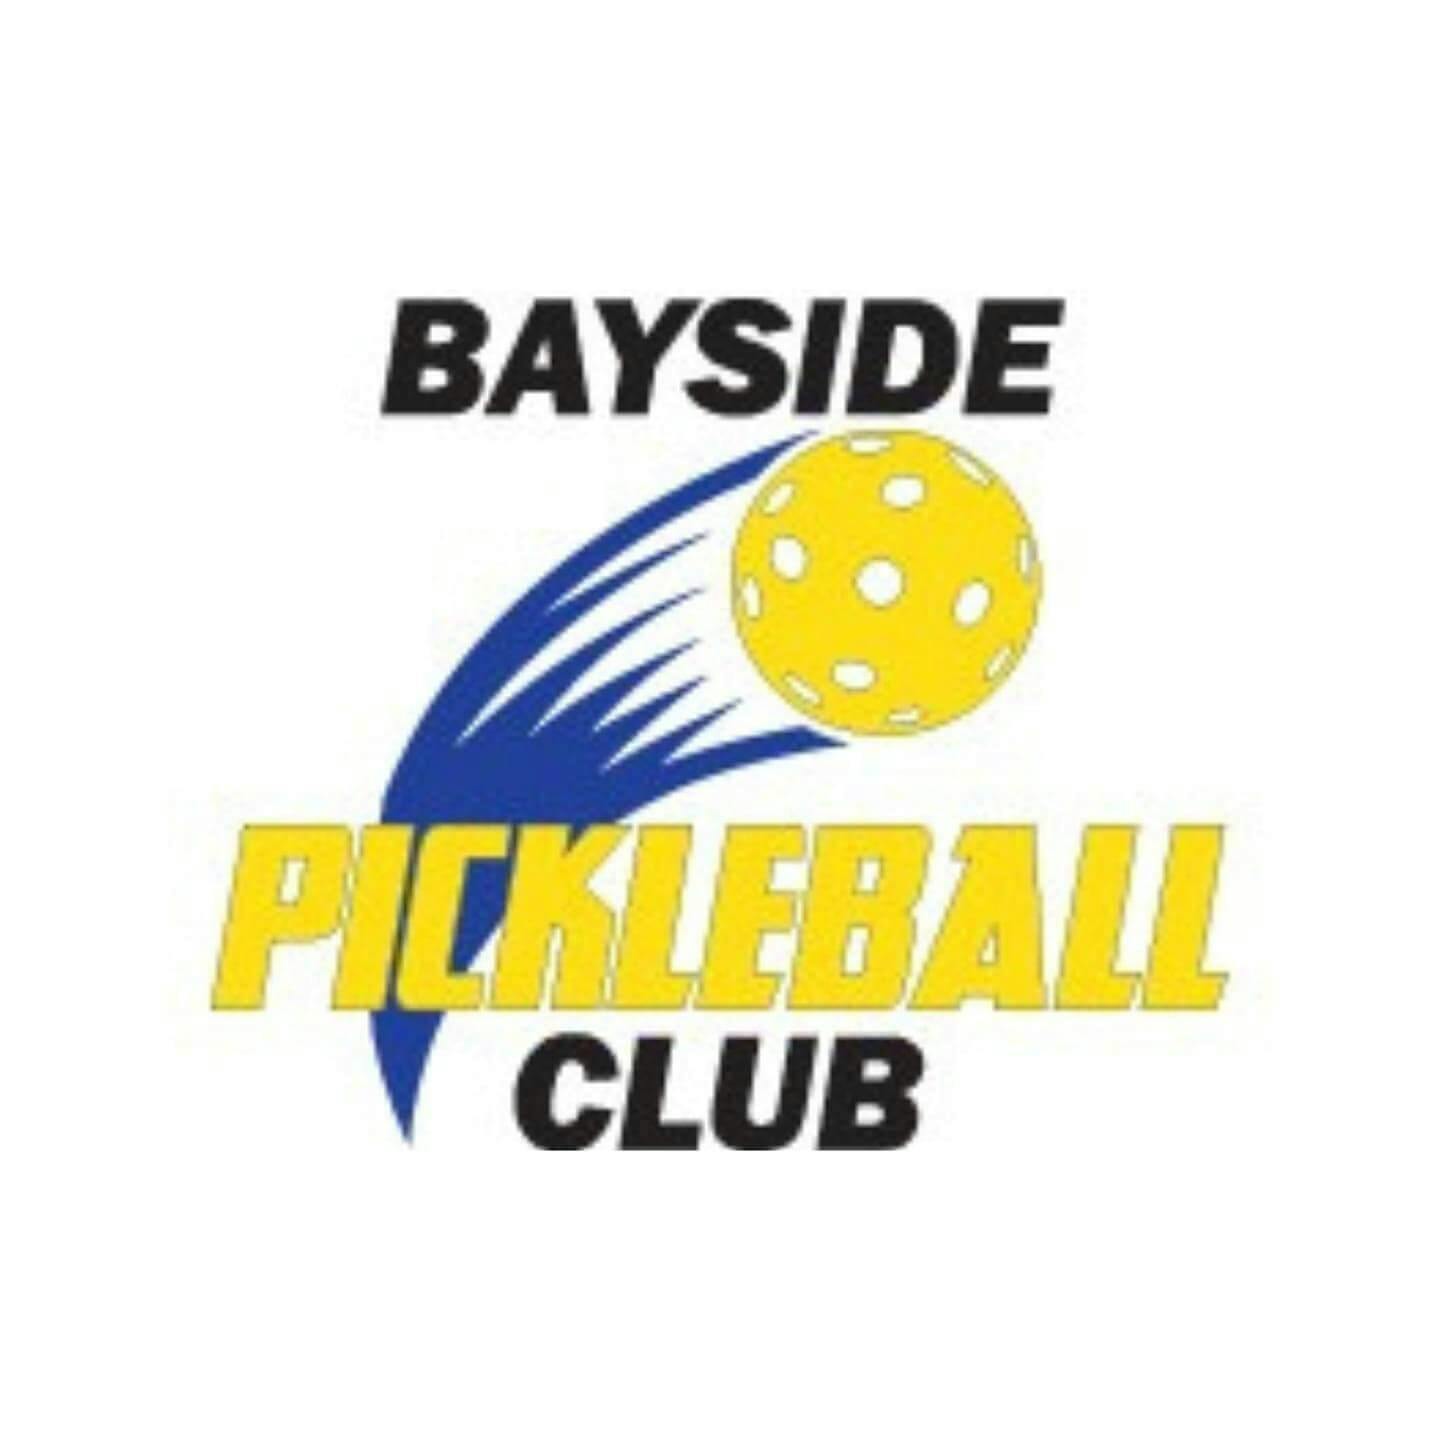 Bayside Pickleball Club (Outdoor)